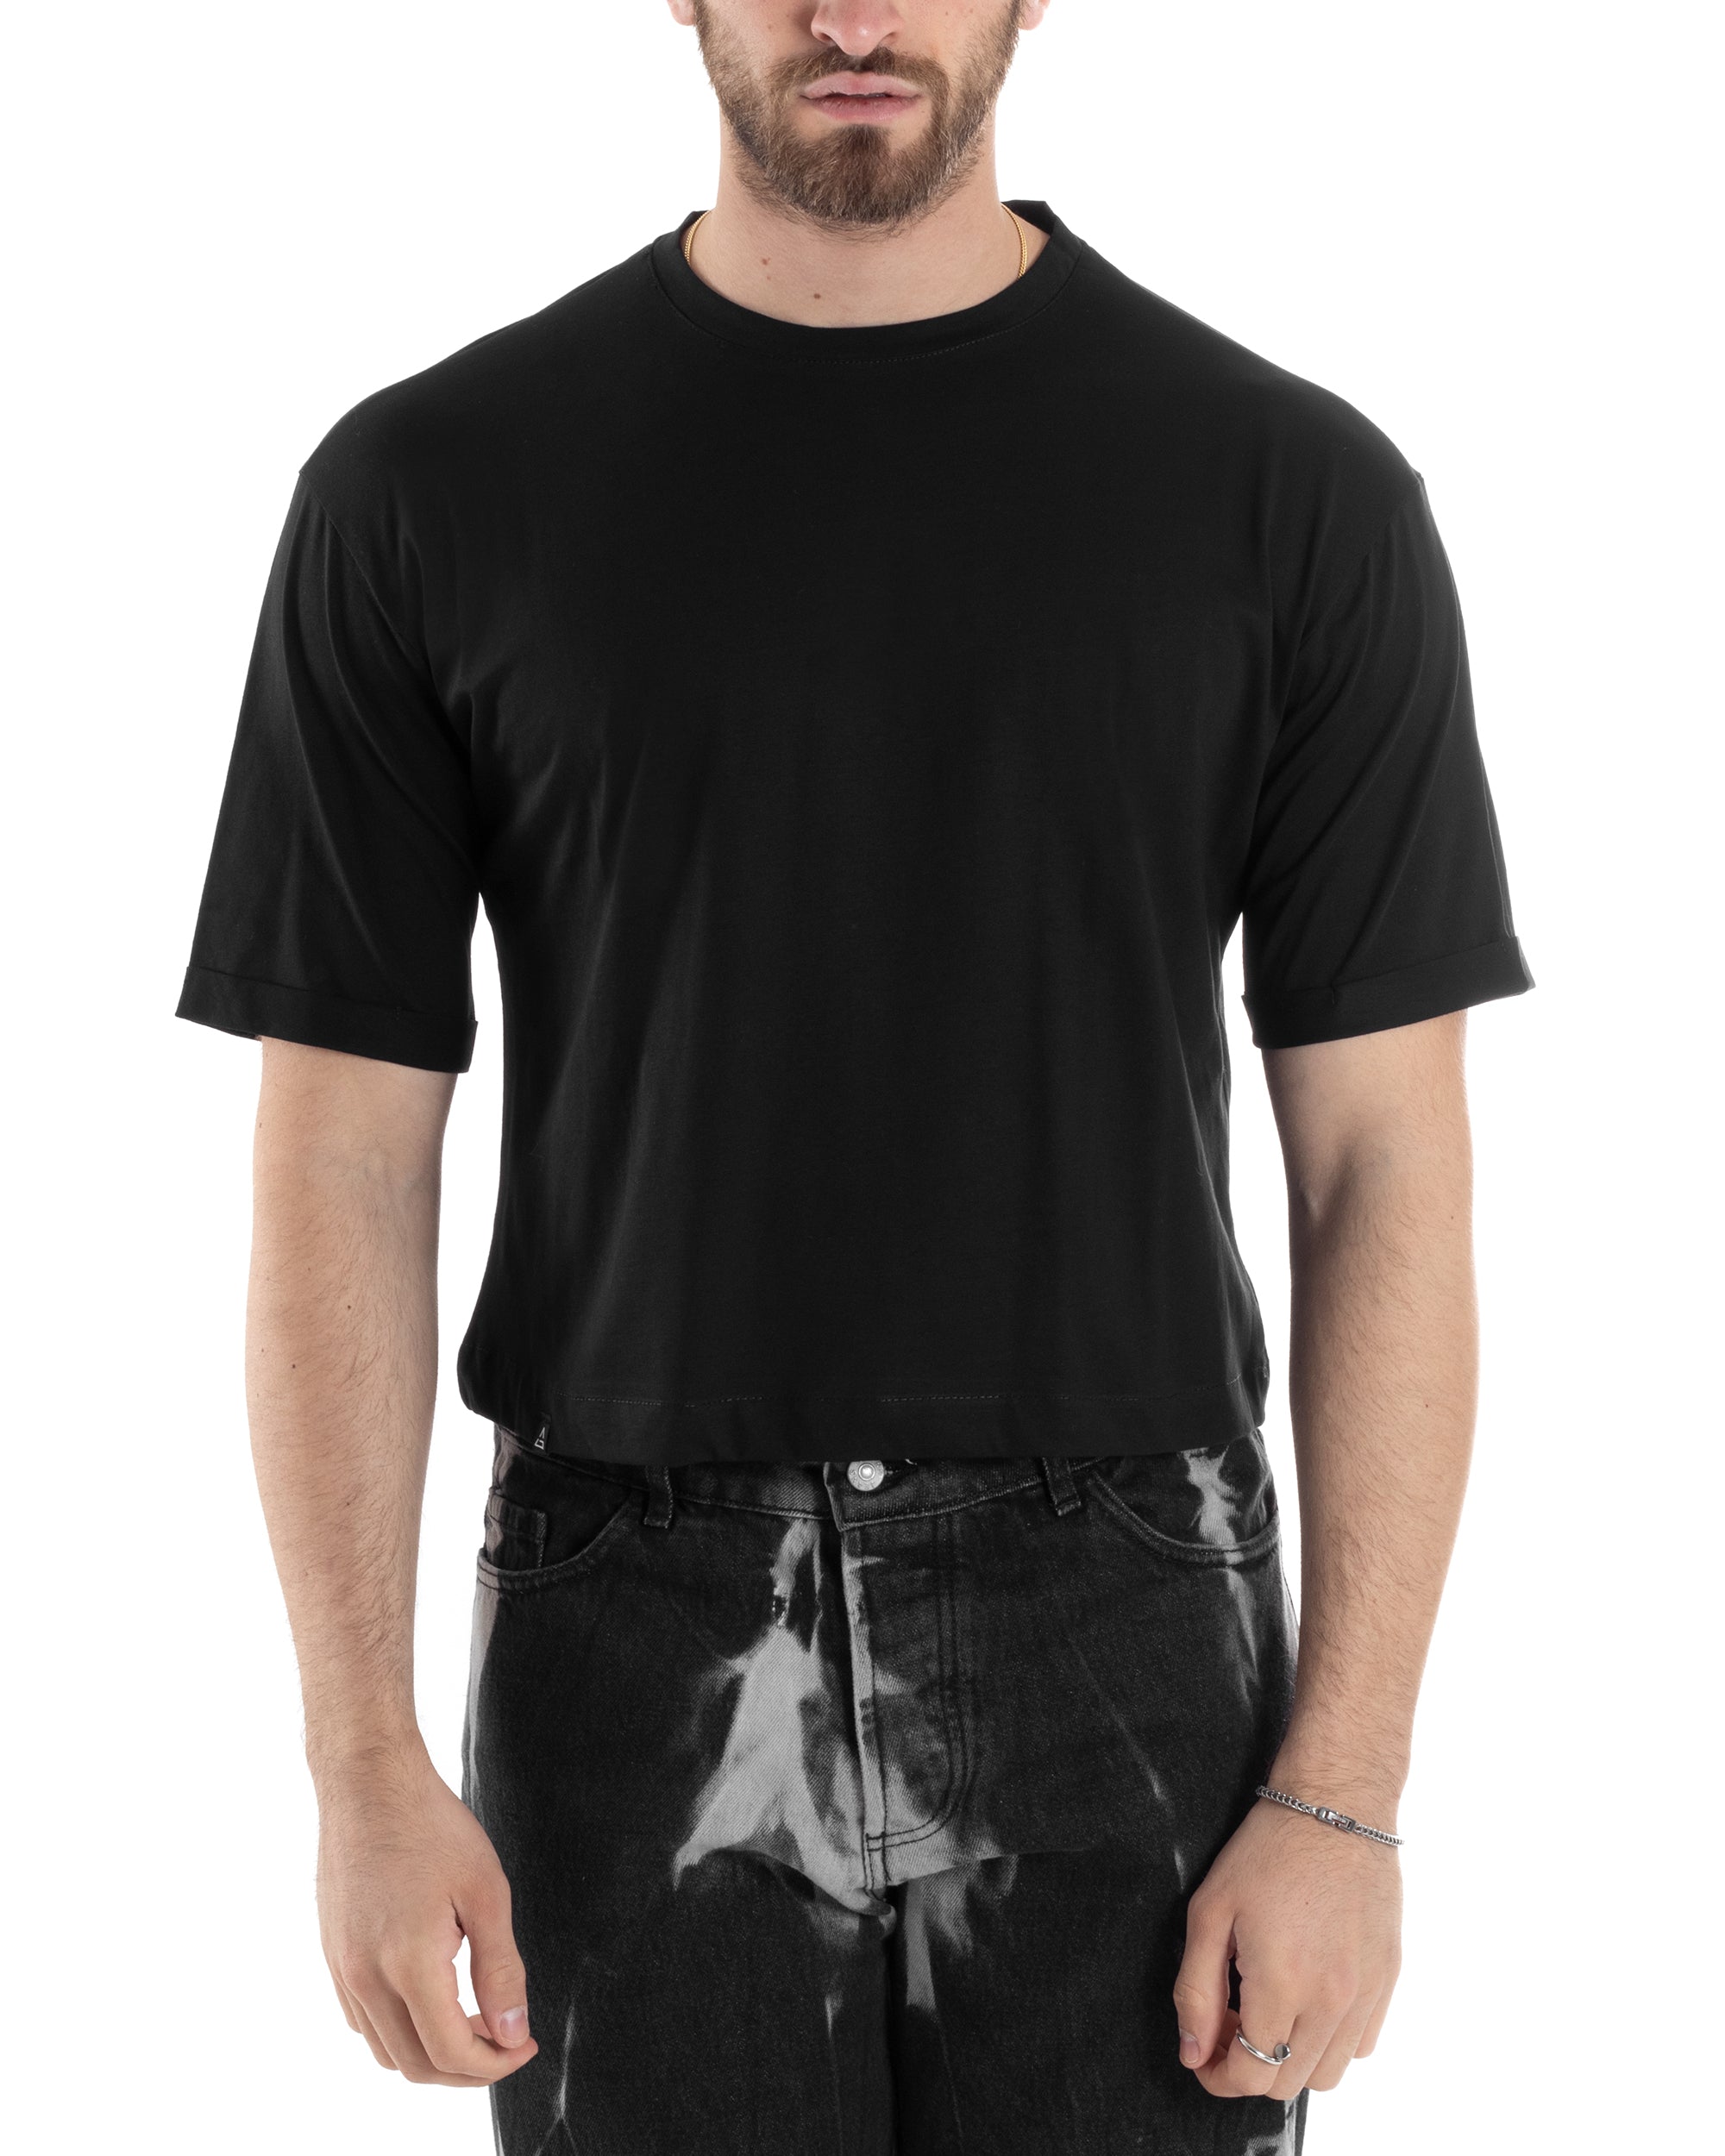 T-shirt Uomo Cropped Corta Boxy Fit Tinta Unita Nero Casual GIOSAL-TS3010A